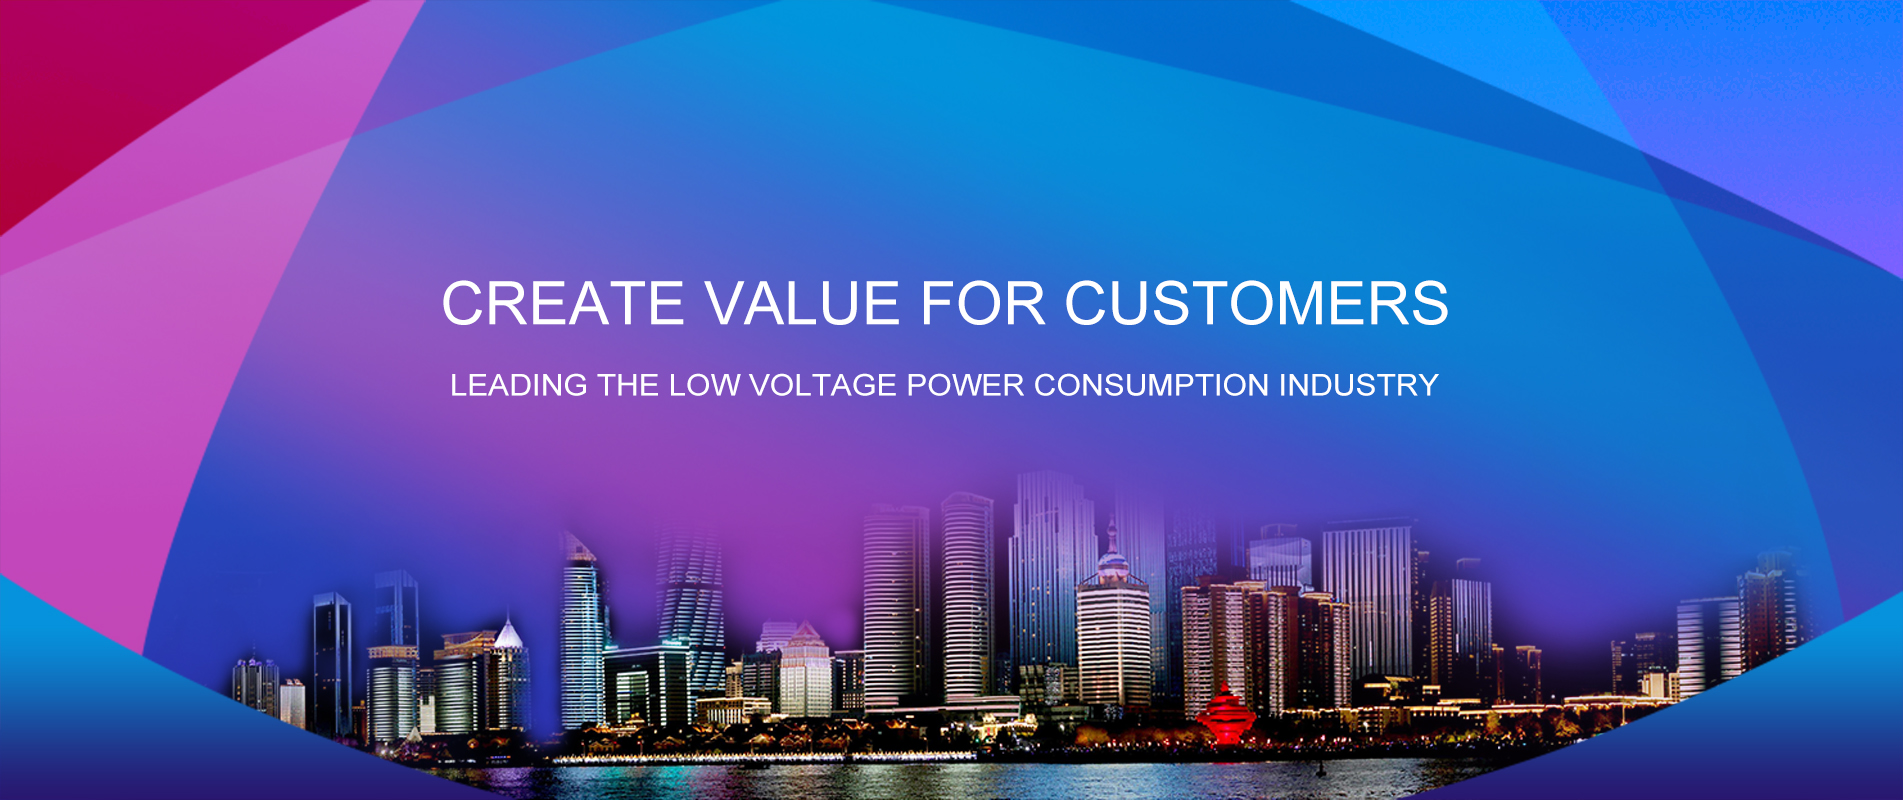 Low Voltage Power Consumption Leader